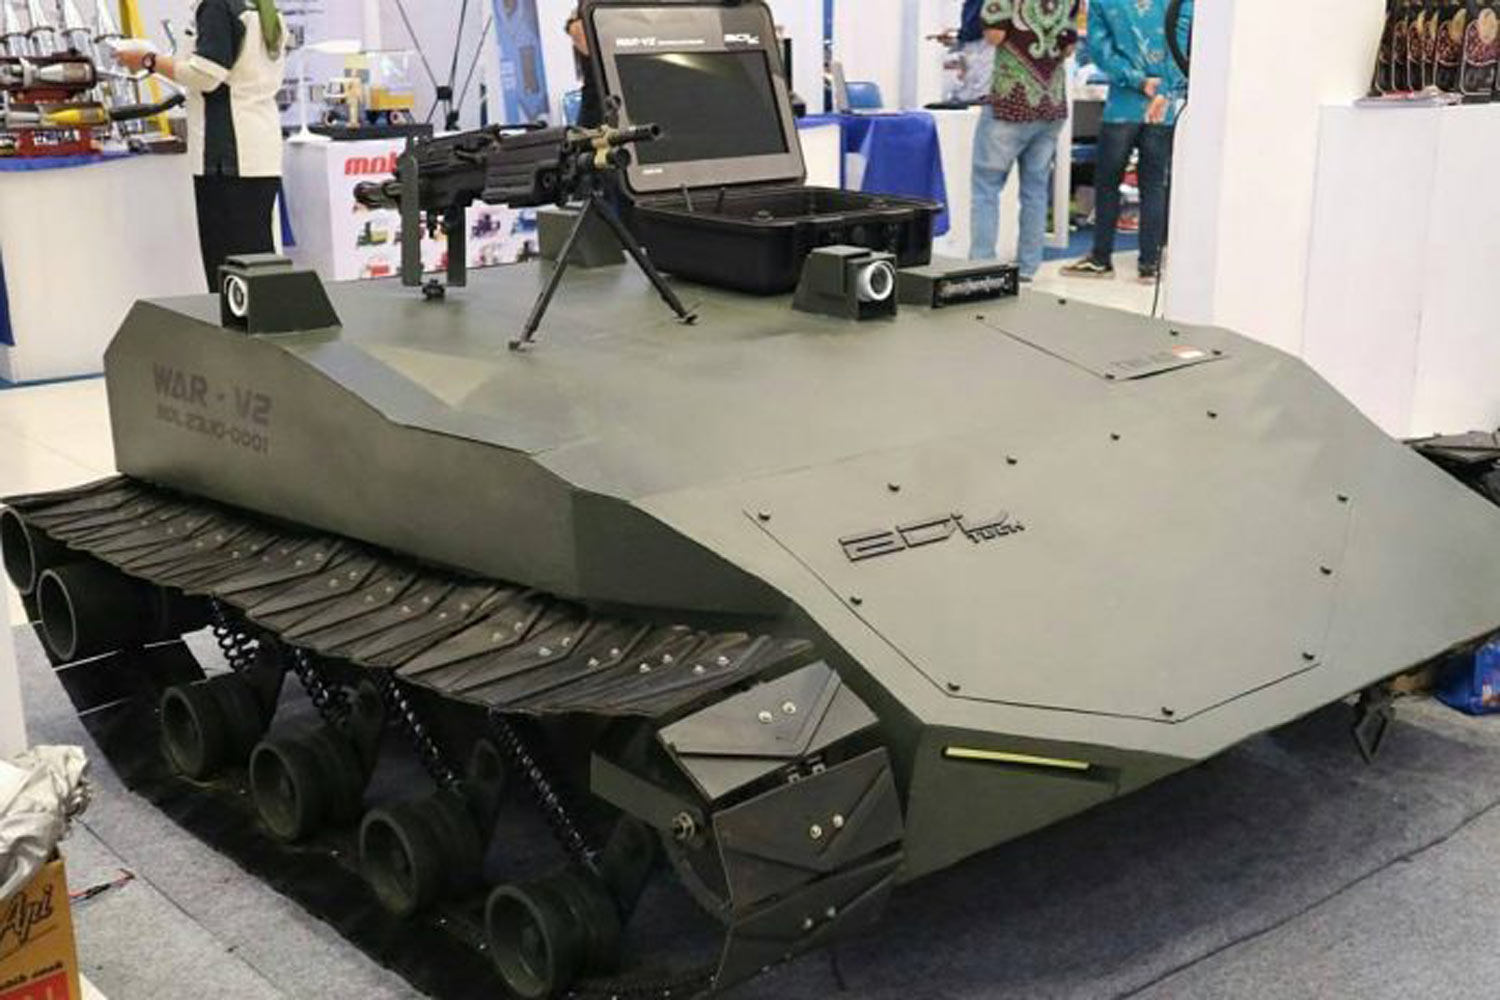 WAR-V2 Diperlihatkan – Dron Kenderaan Darat Modular Buatan Indonesia